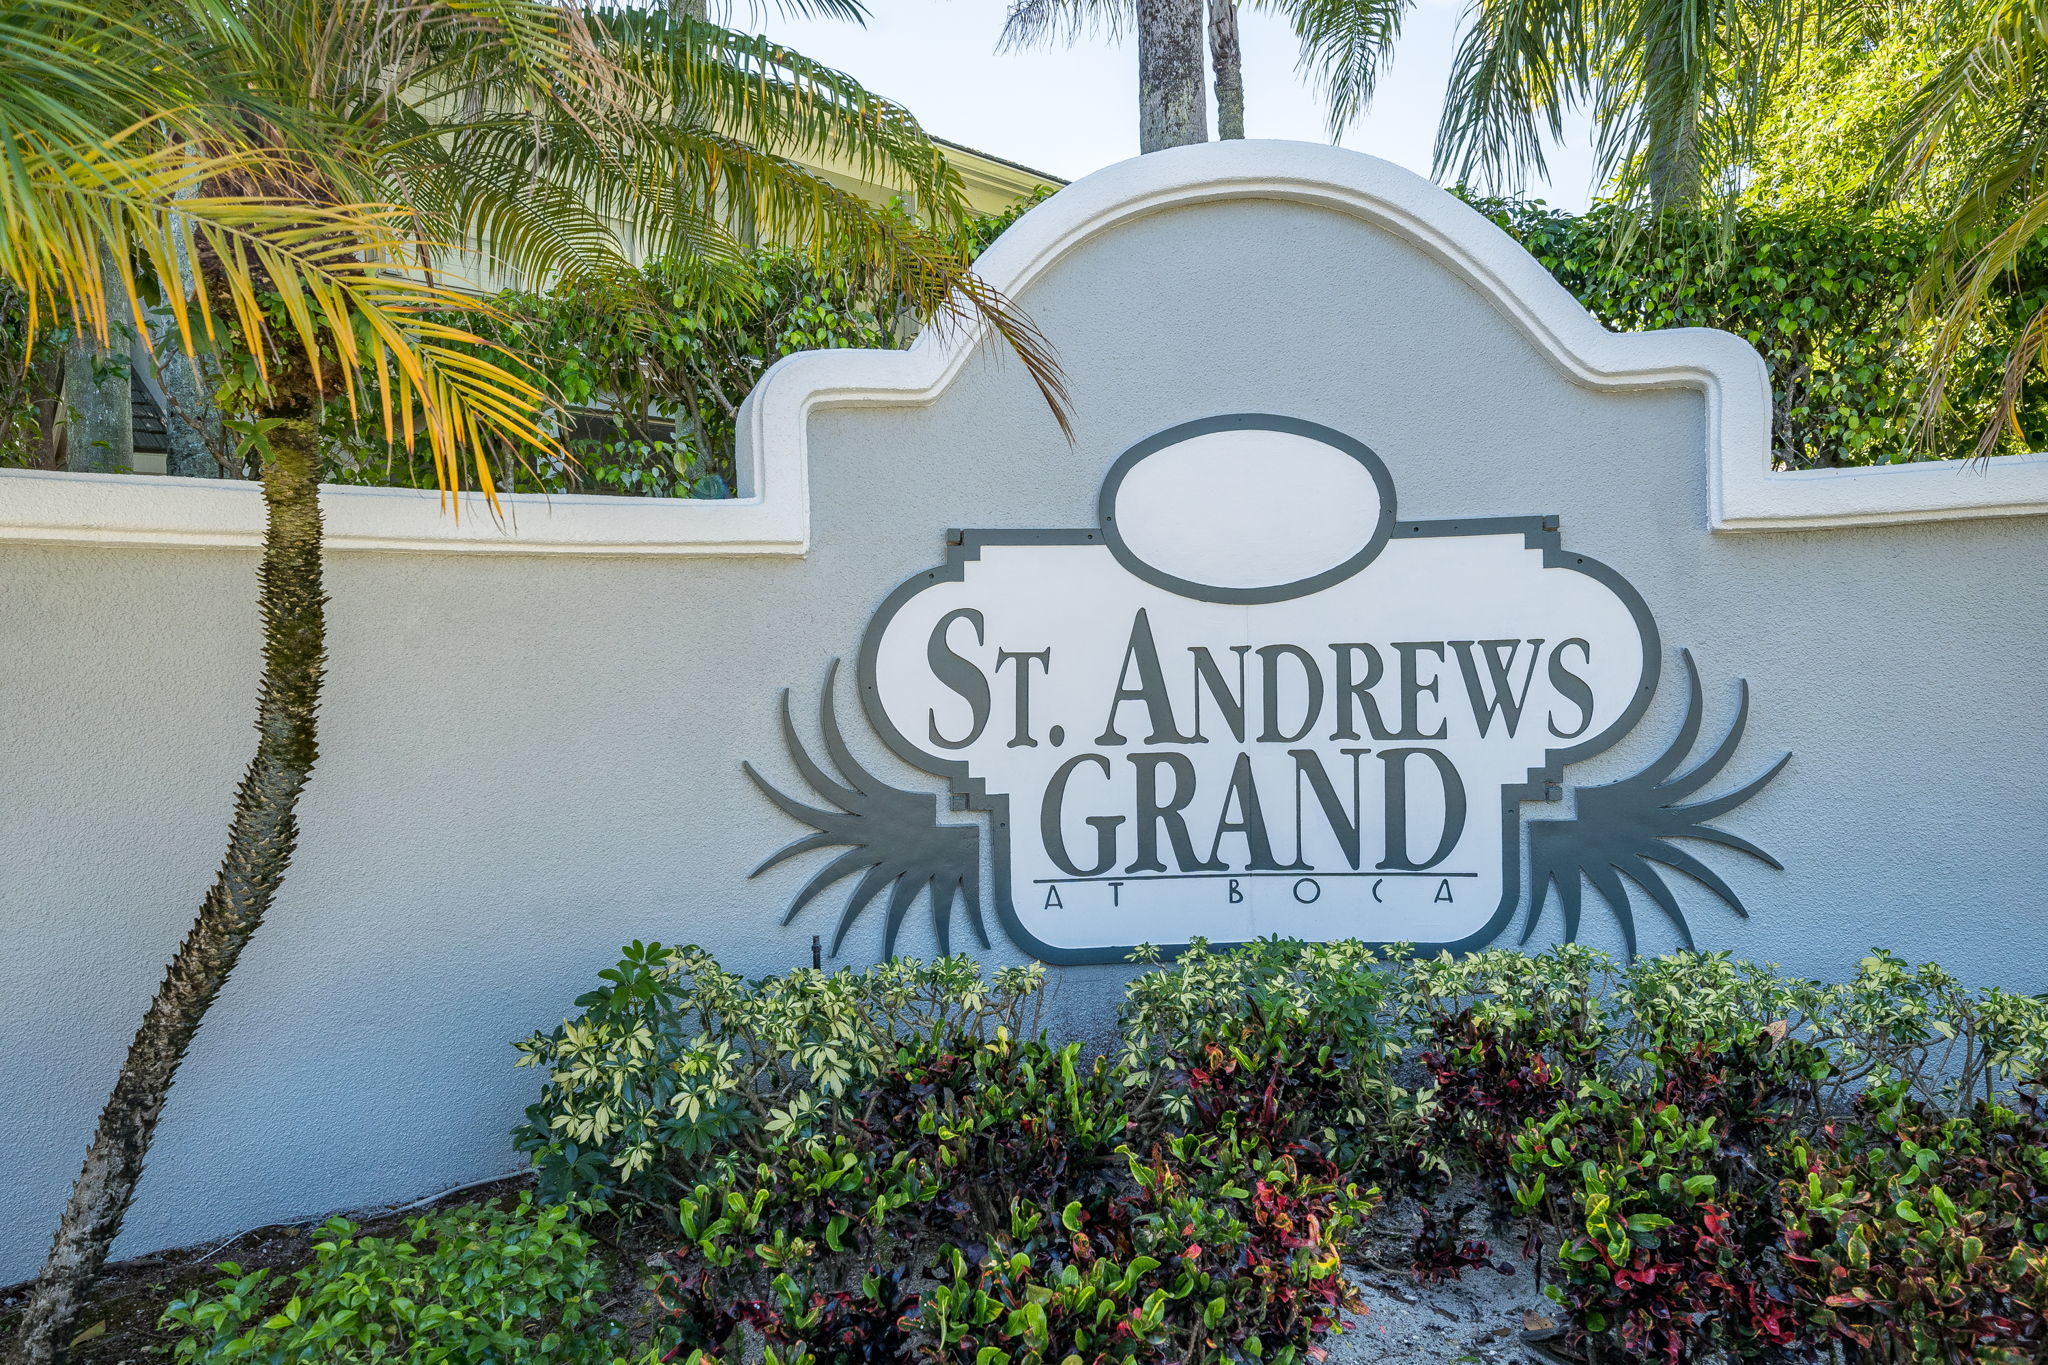  21510 Saint Andrews Grand Circle, Boca Raton, FL 33486, US Photo 41